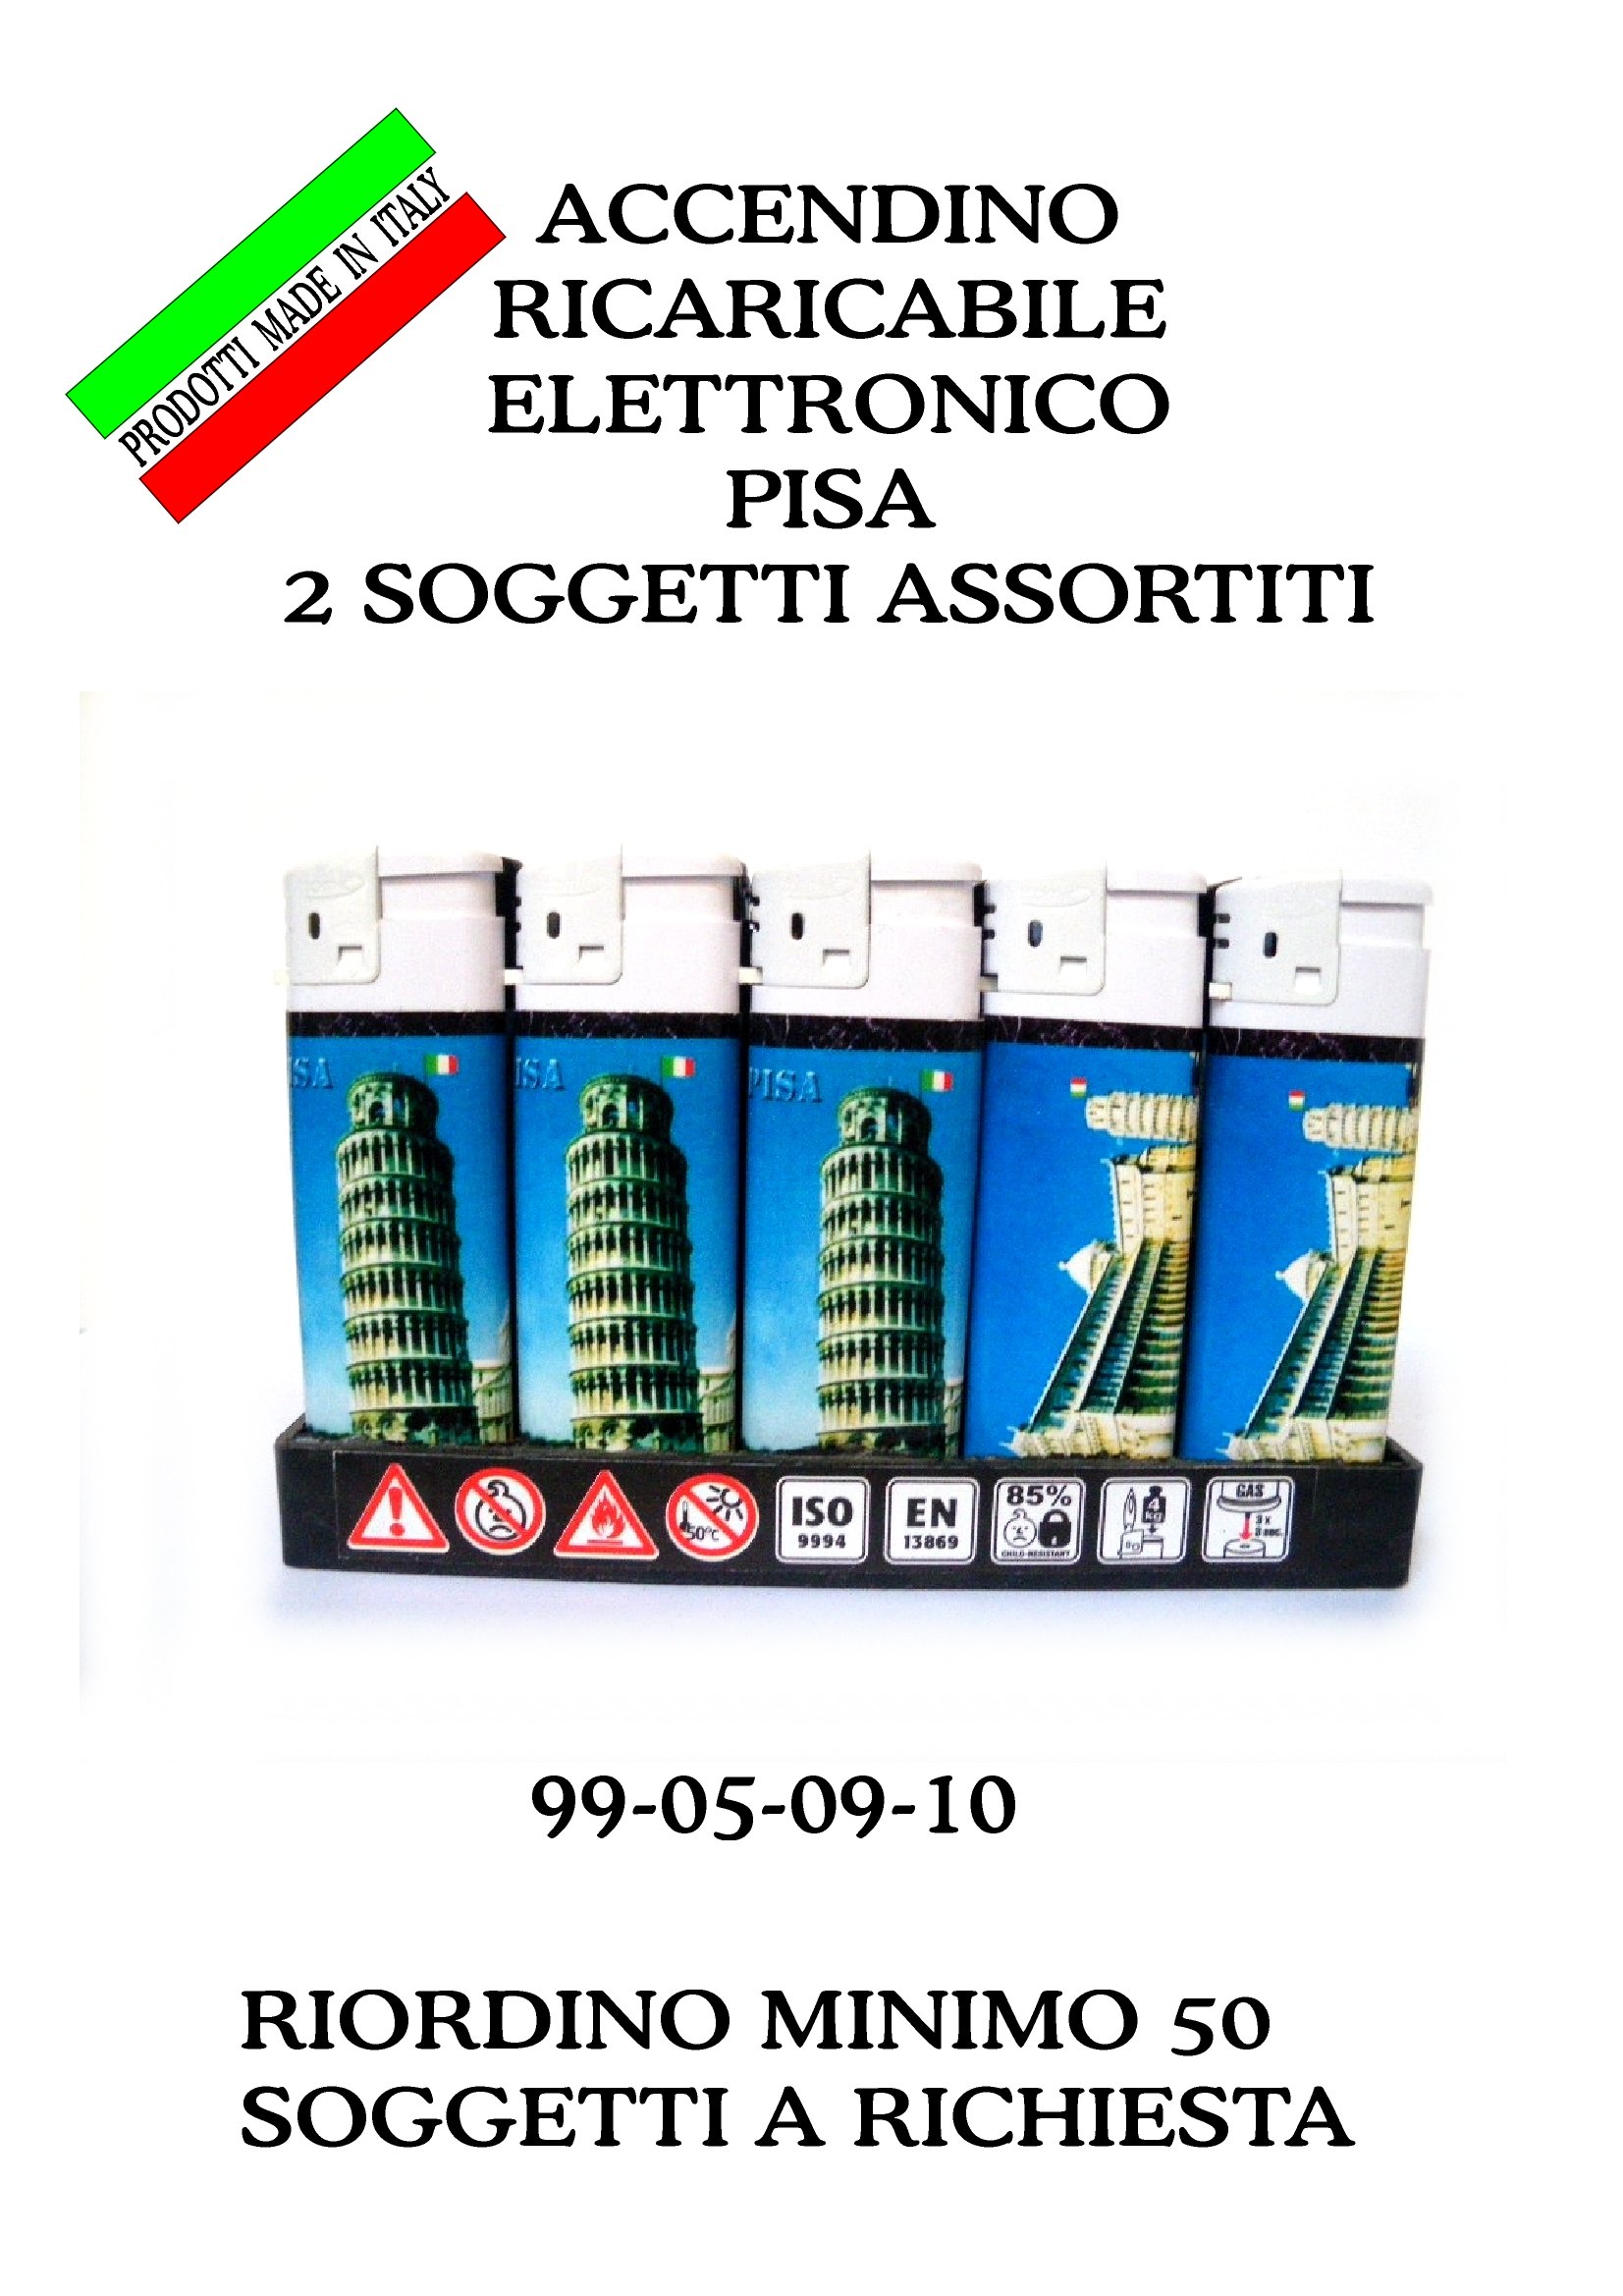 99-05-06-0010 Accendini Pisa Gettabili Duomo e Torre CONFEZIONI da n.50 Pz